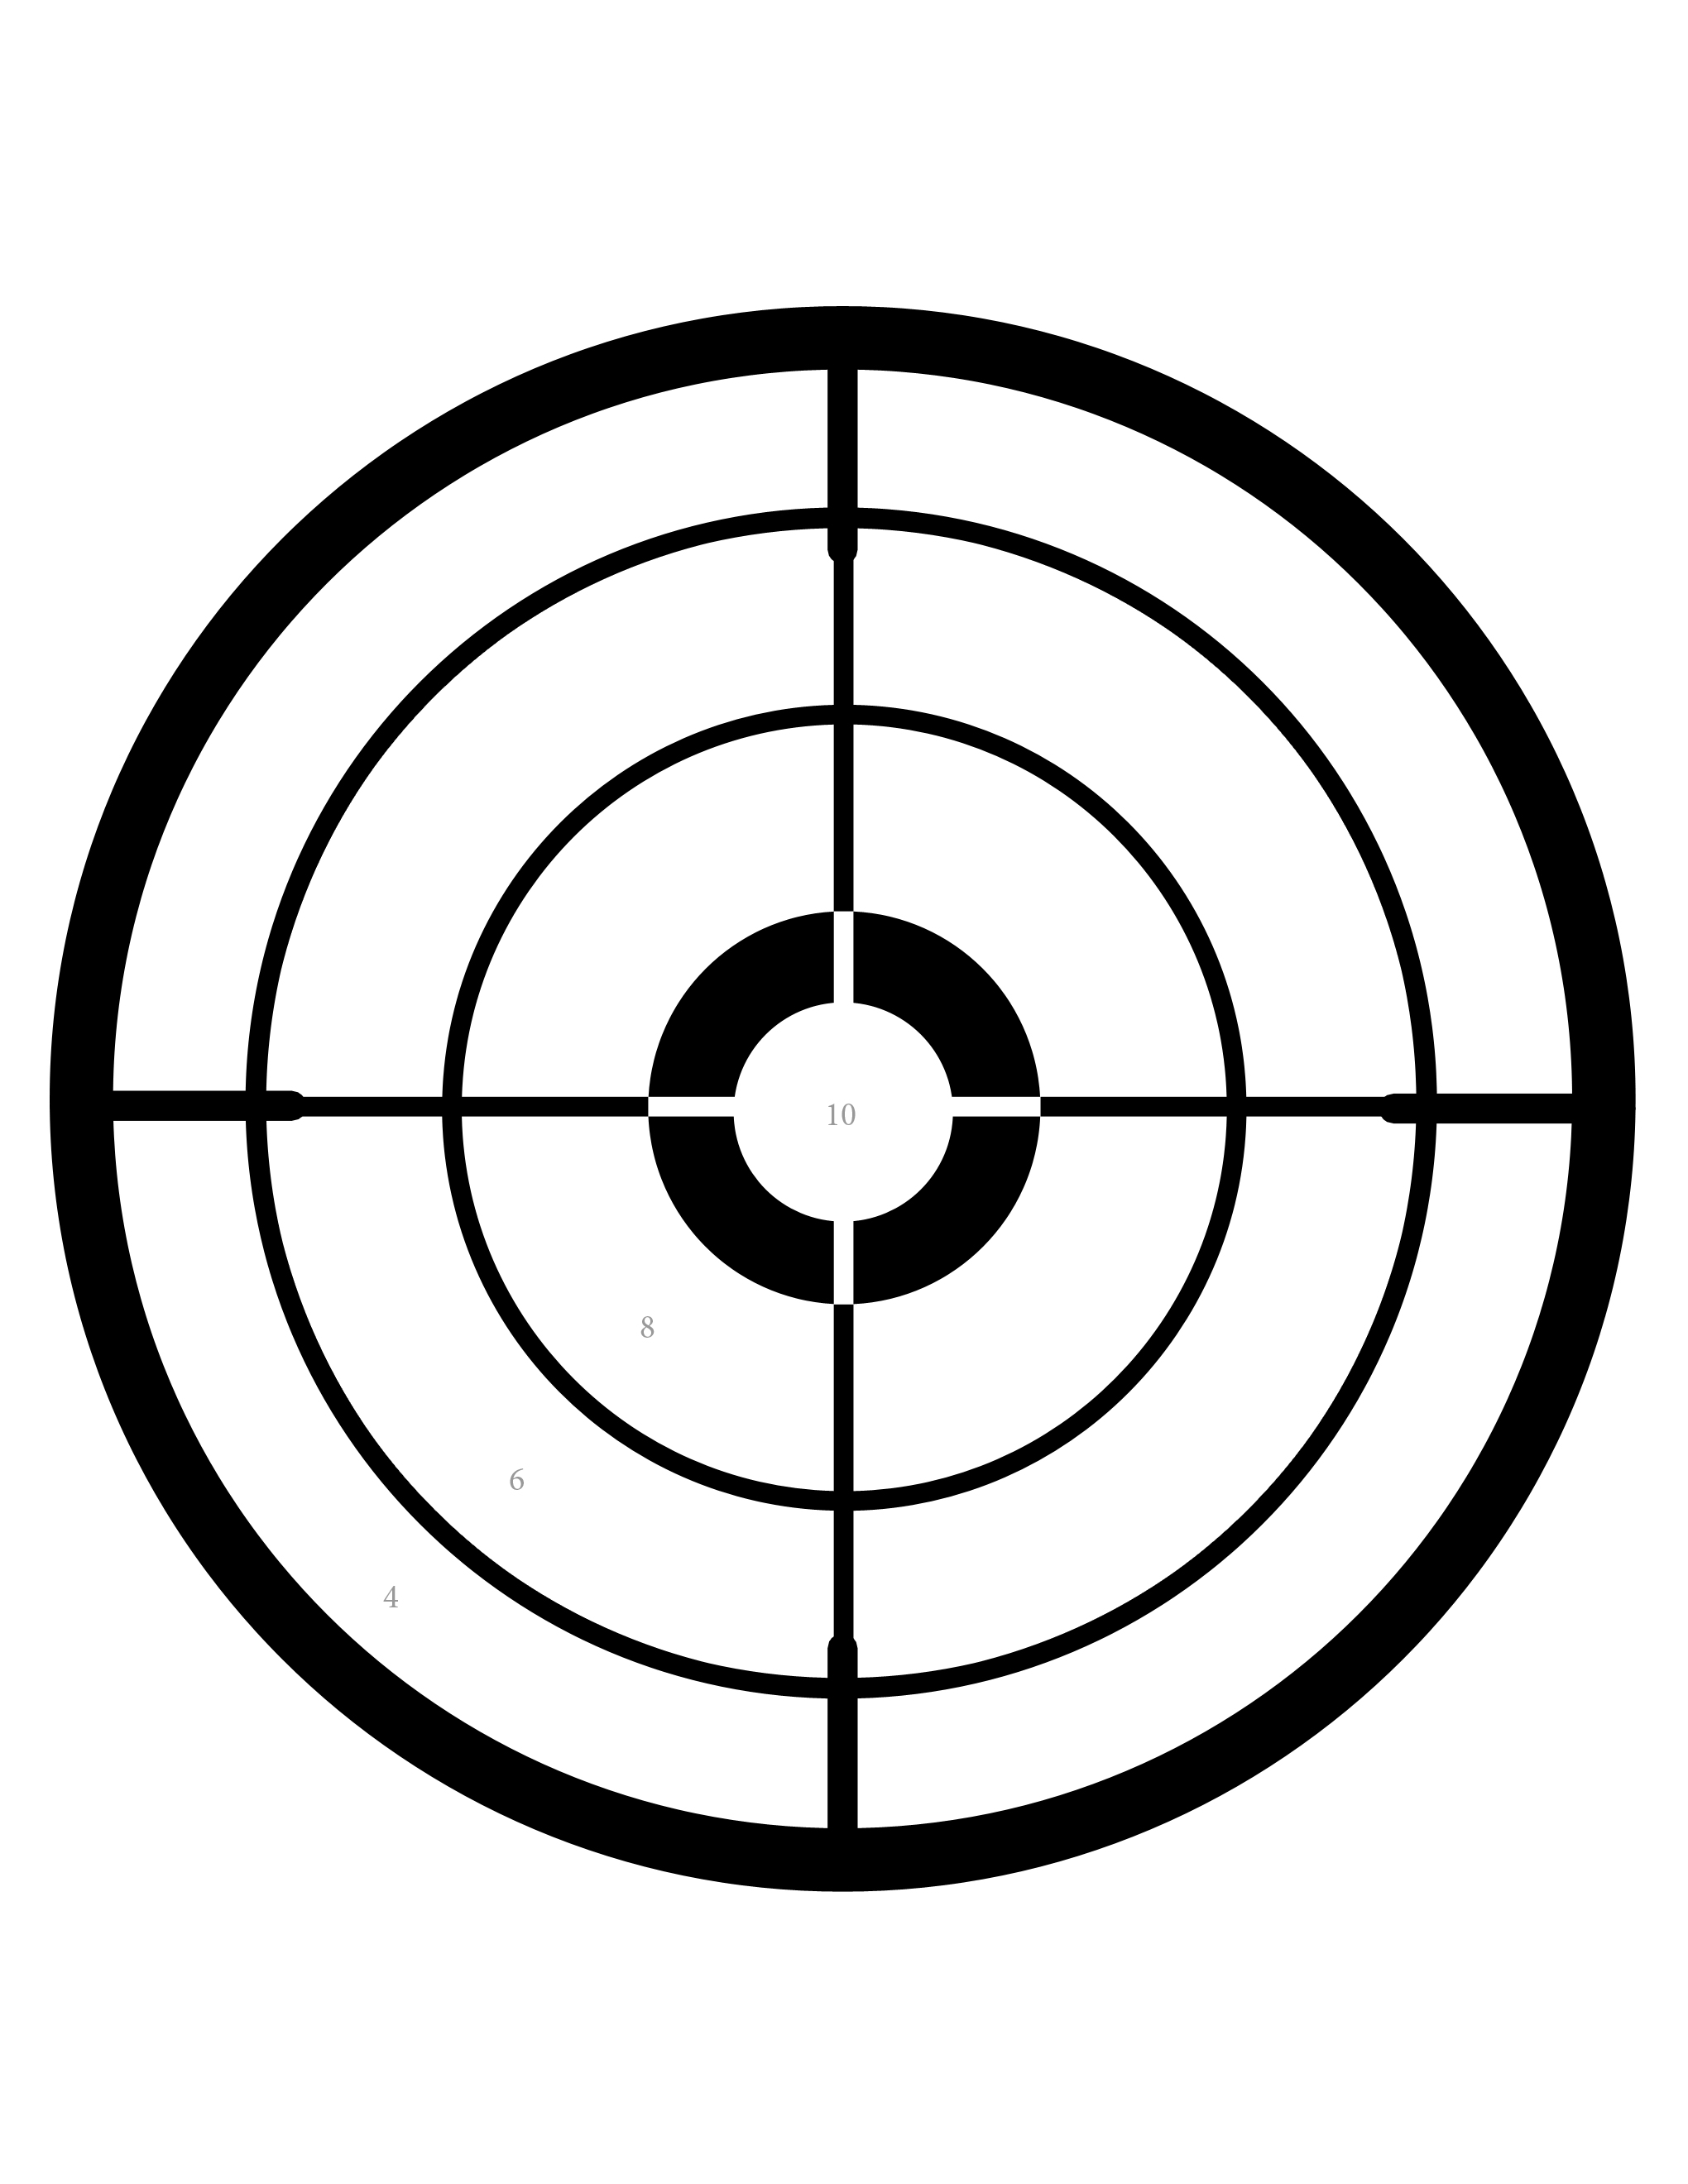 Free Printable Shooting Target